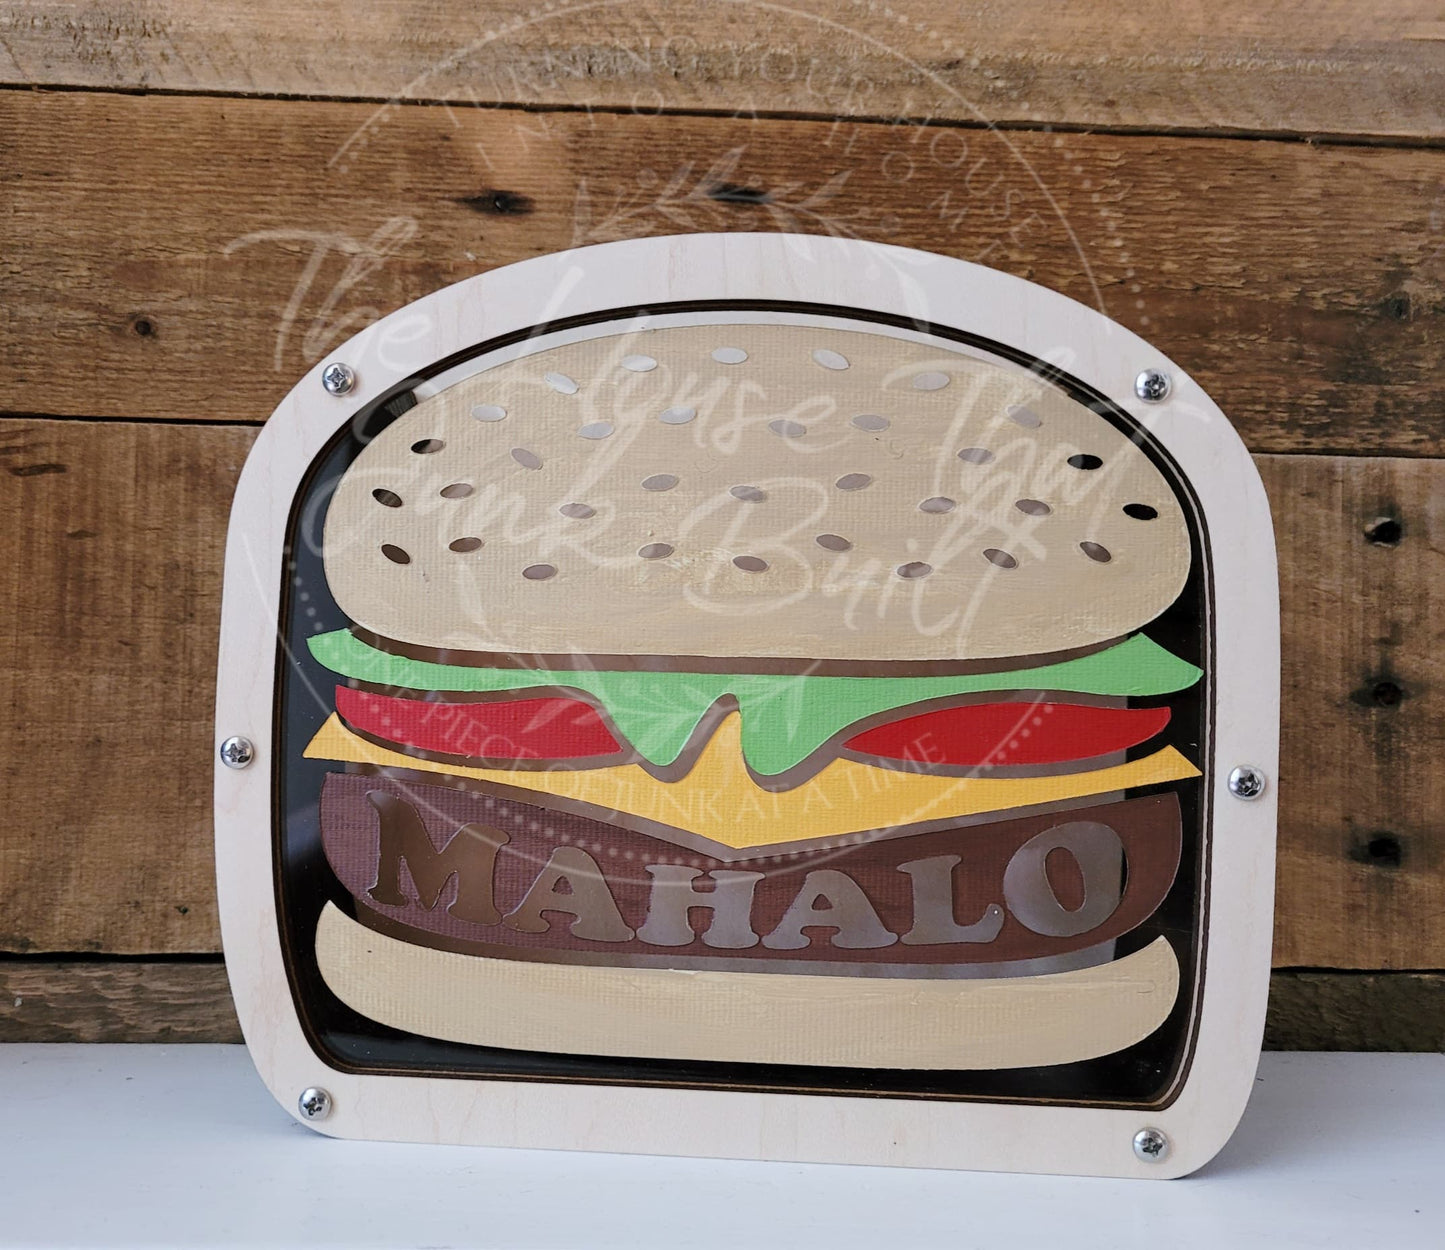 Cheeseburger Tip Jar